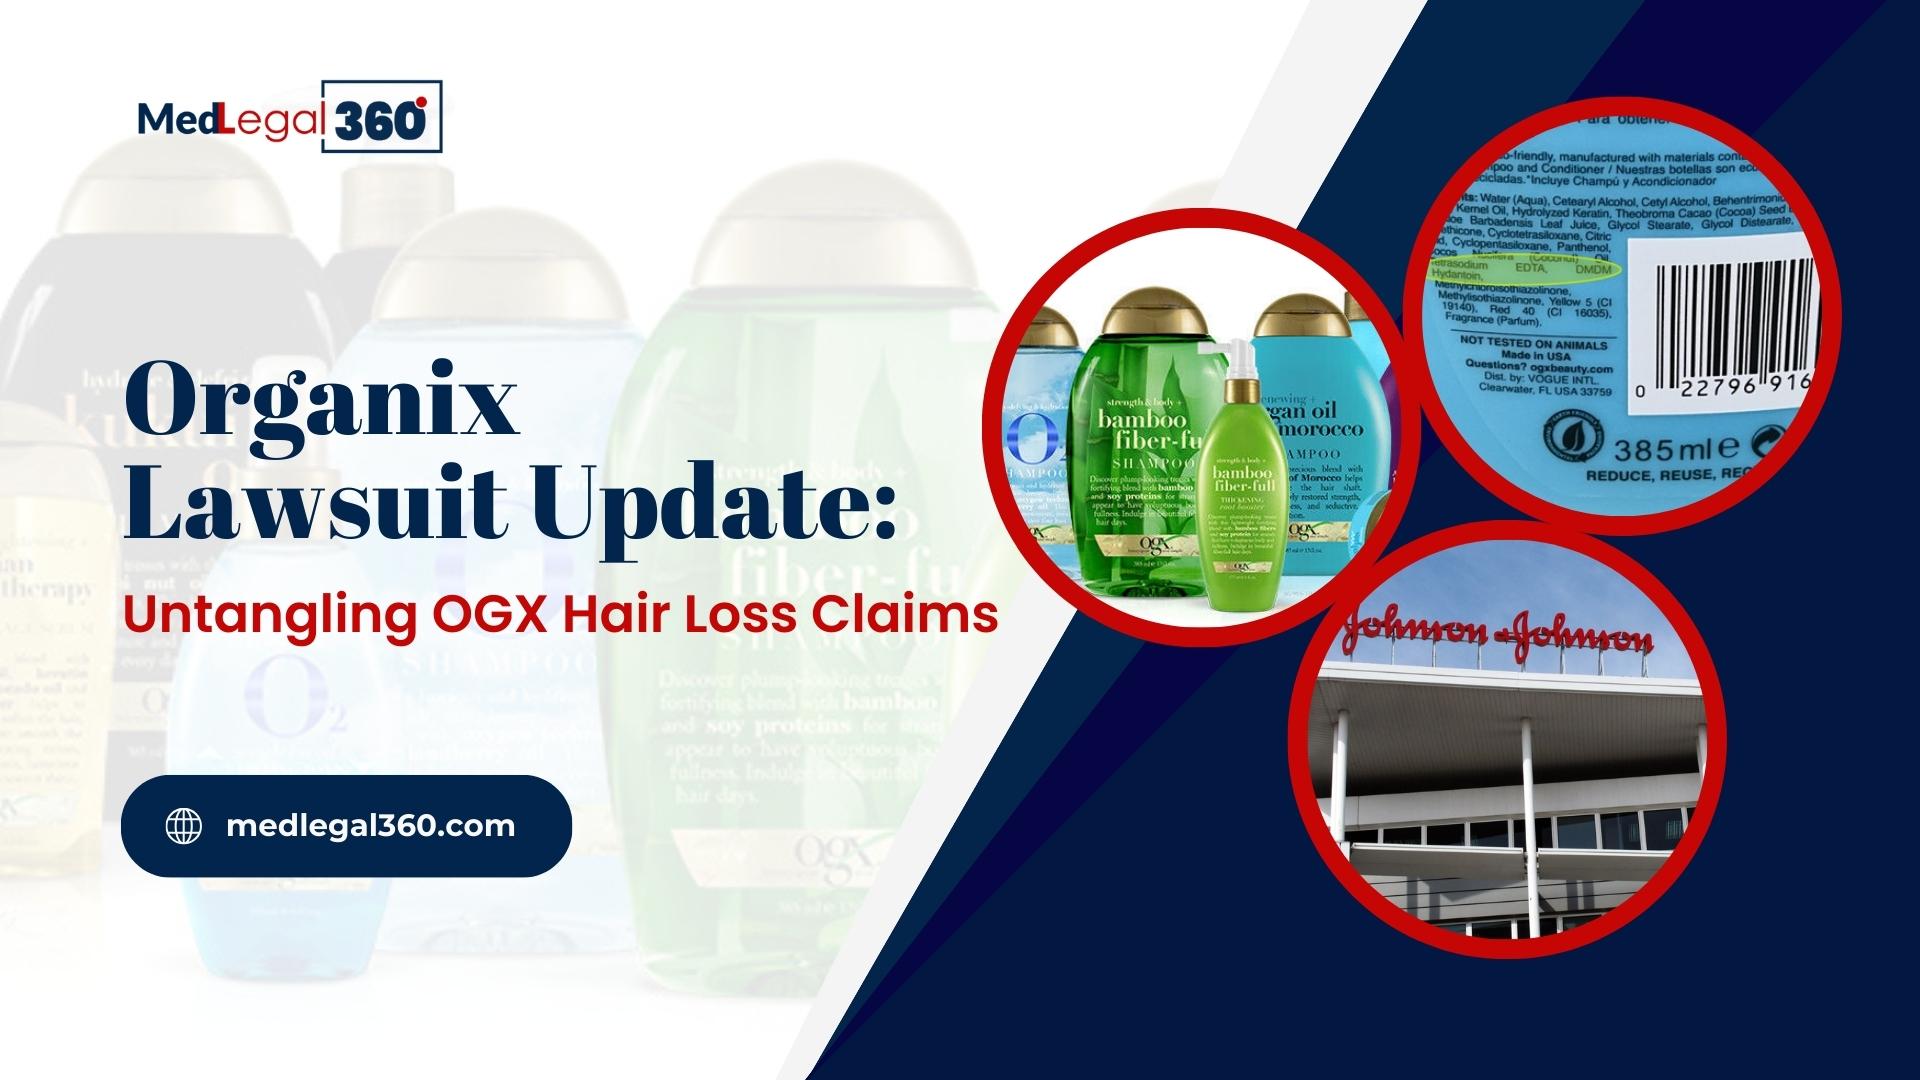 Organix lawsuit Update: Untangling OGX Hair Loss Claims